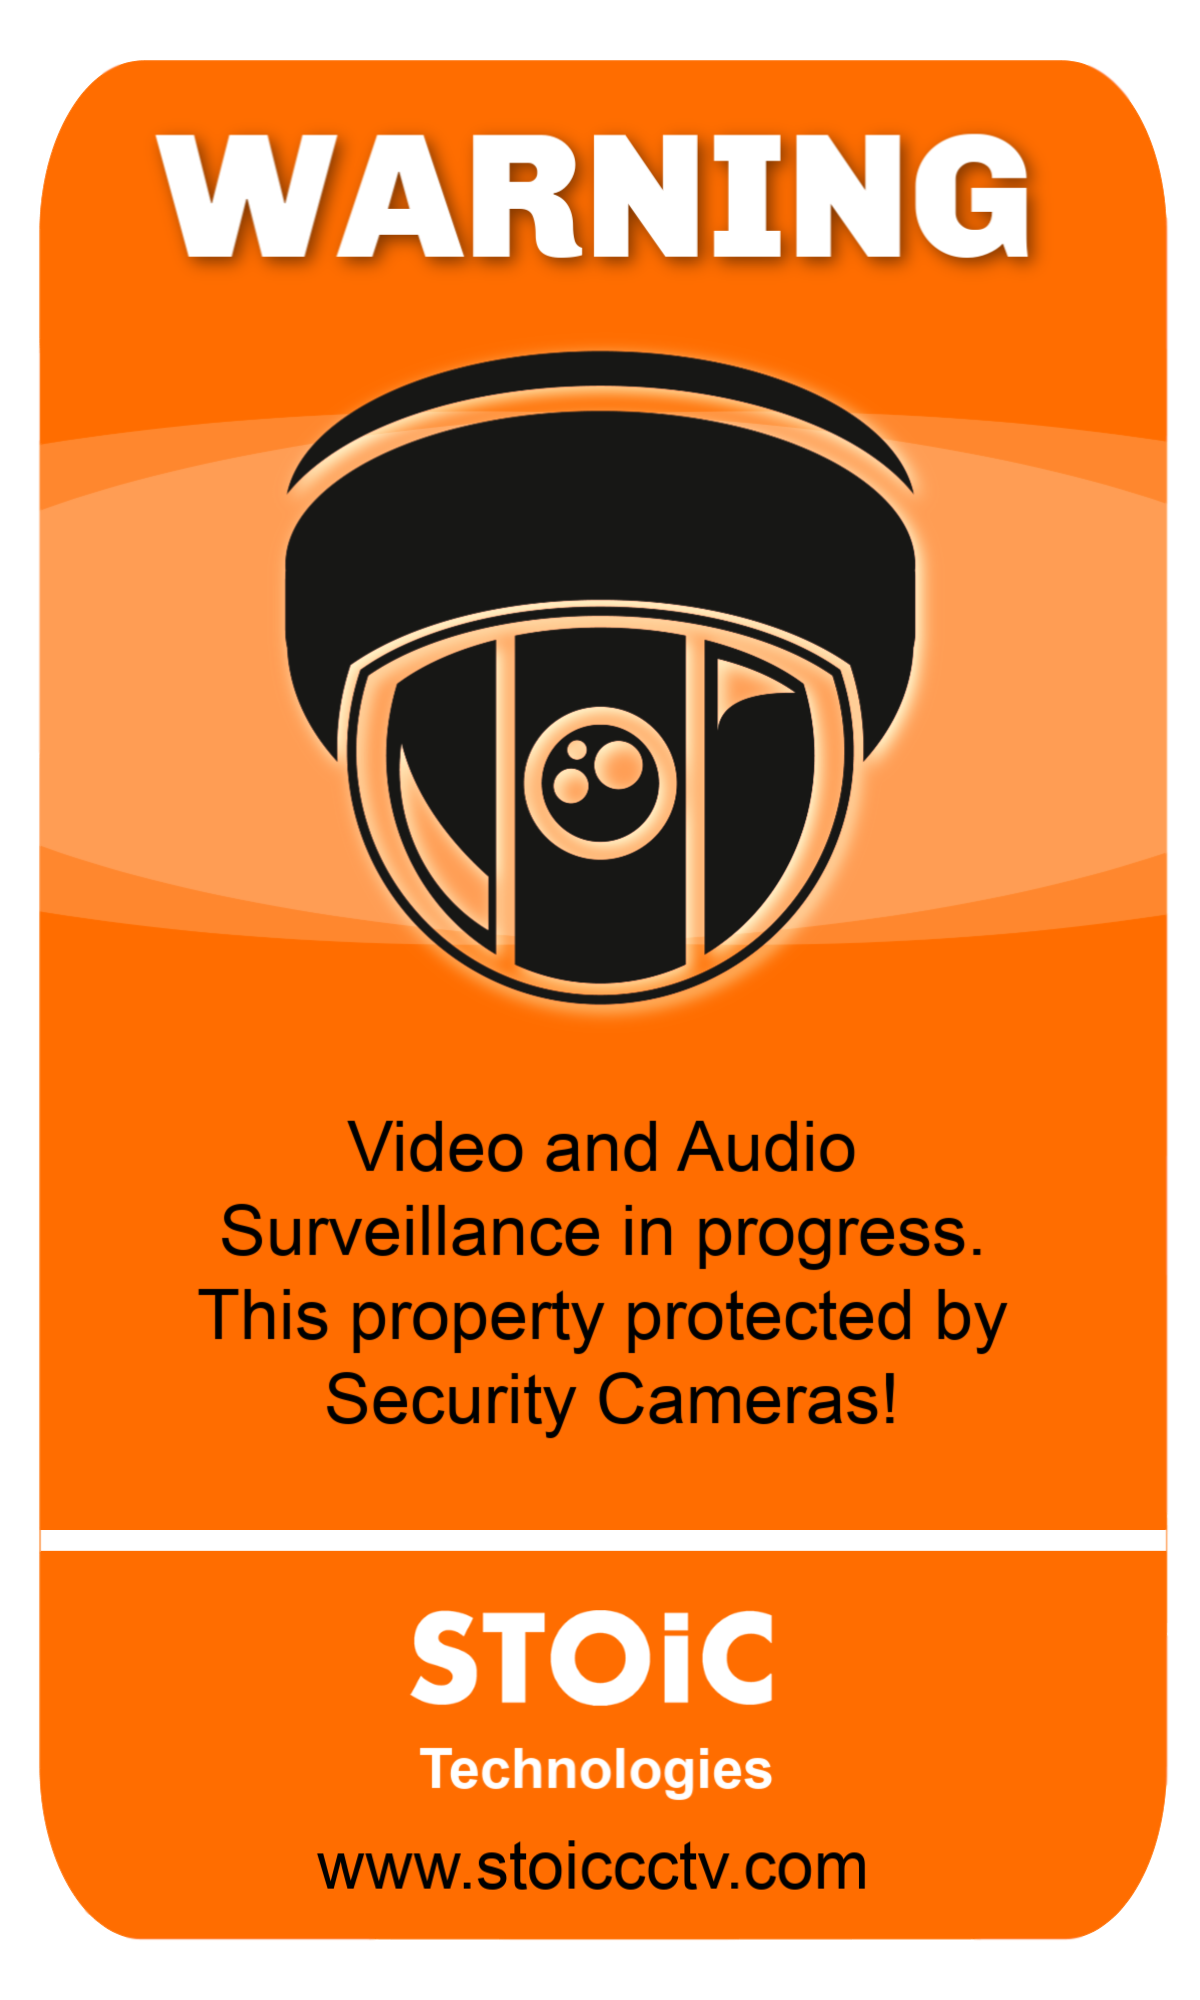 8 CCTV Security Camera Video Warning Sticker Sign Decal Home Surveillance b0j 